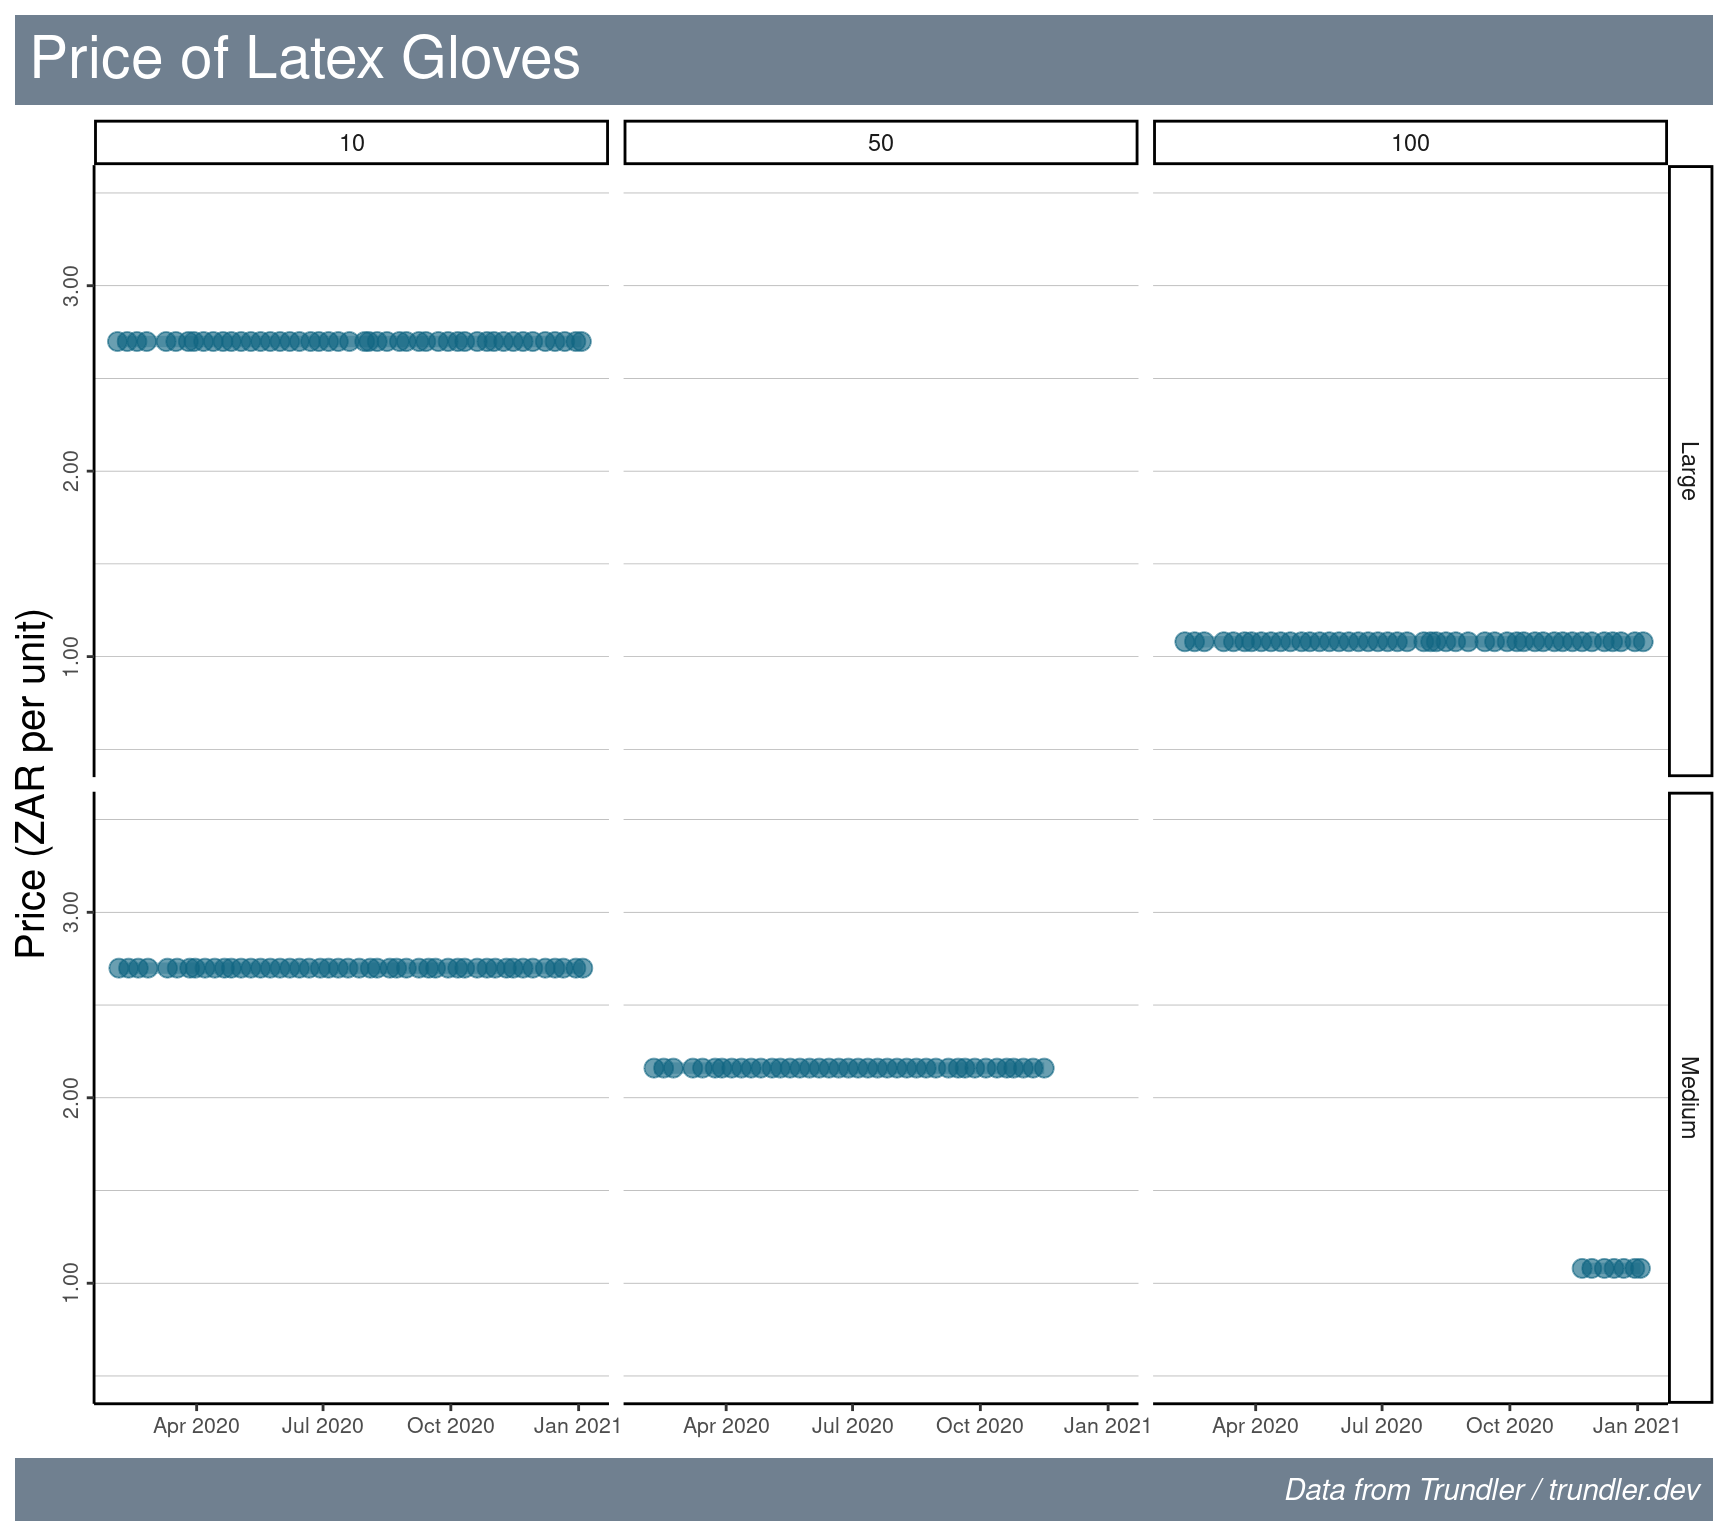 Price of latex gloves versus time.